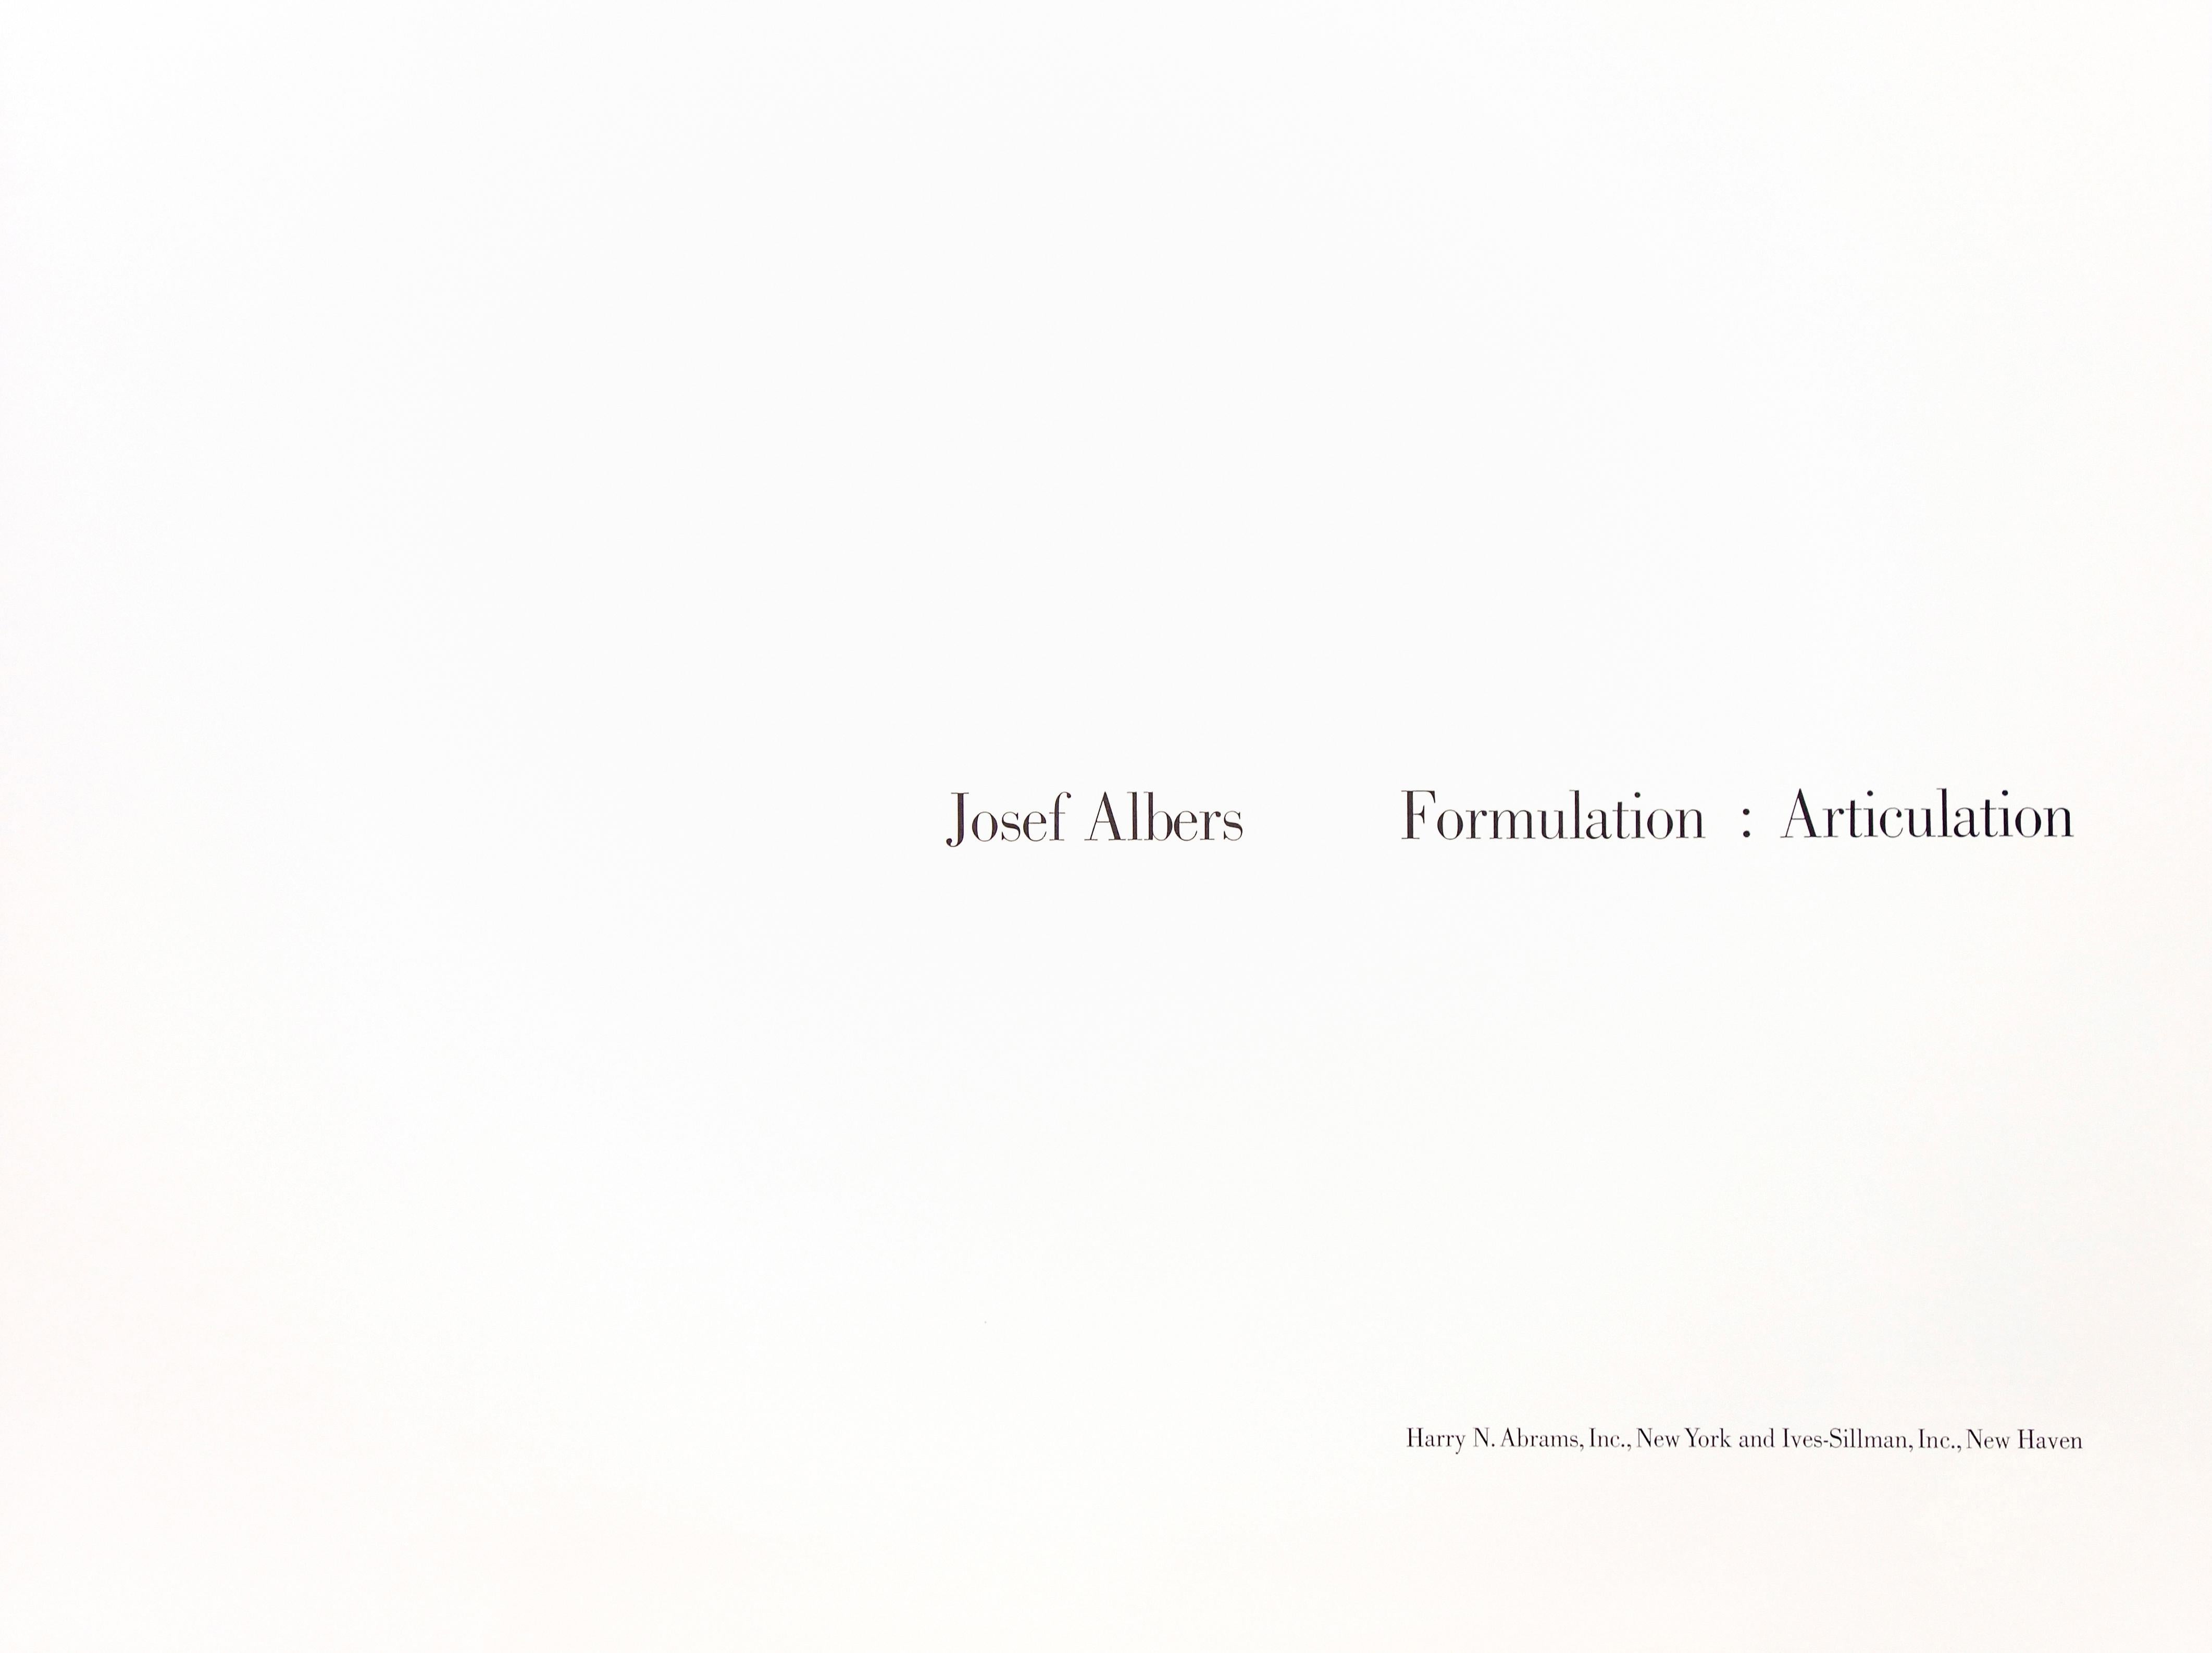 Formulation : Articulation Portfolio I Folder 1 (B) - Blue Abstract Print by Josef Albers